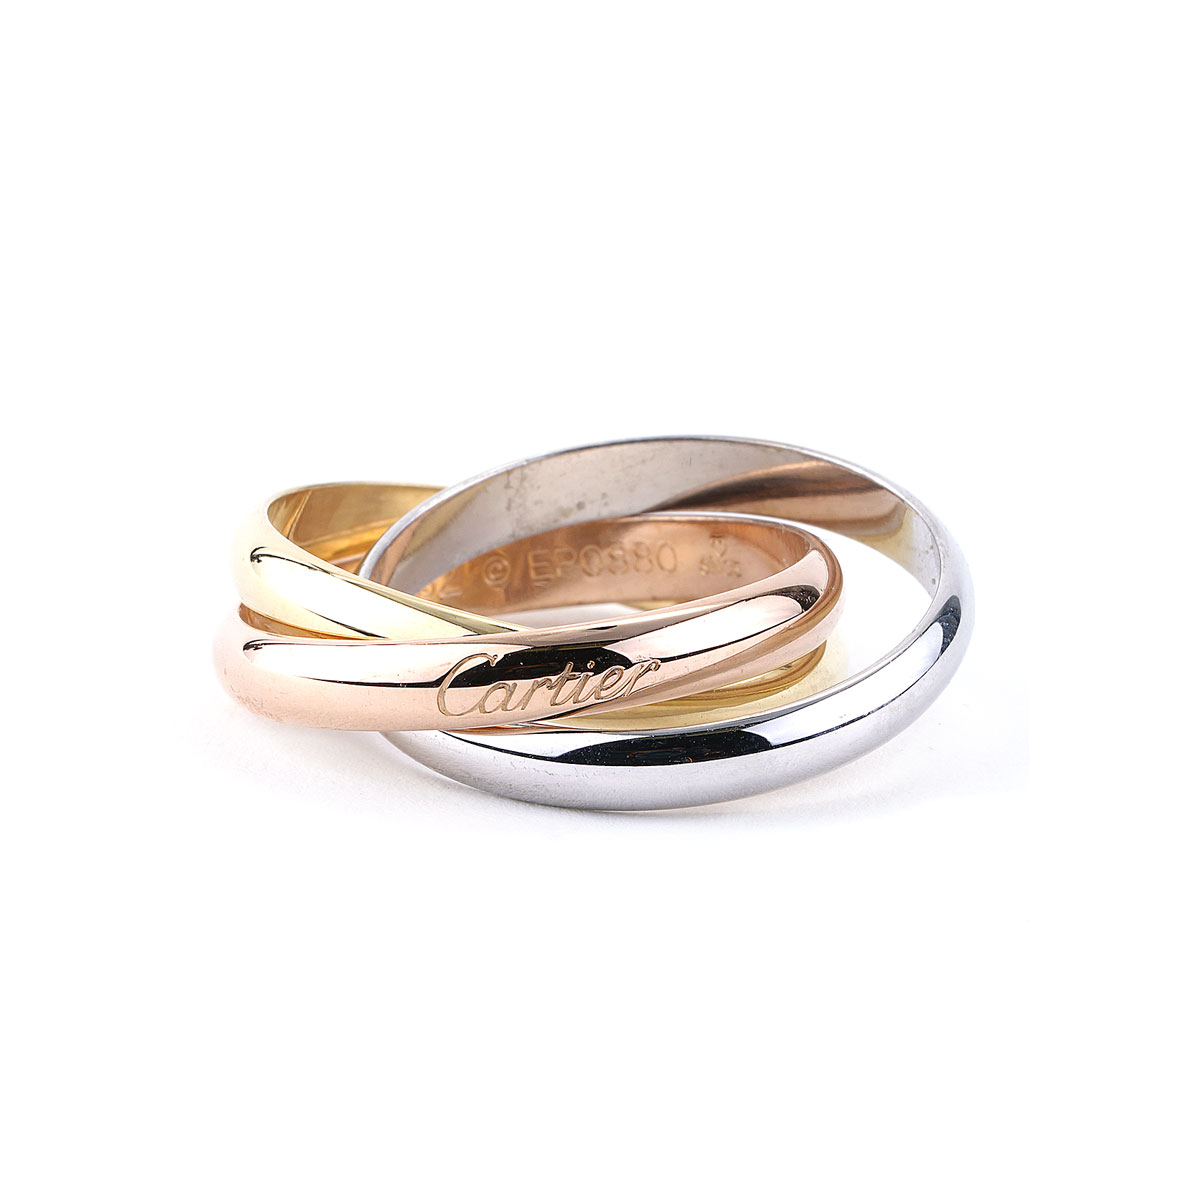 CartierFrench Trinity Ring in 18ctWhite, Yellow&Rose Gold, Medium  |mimijewellery